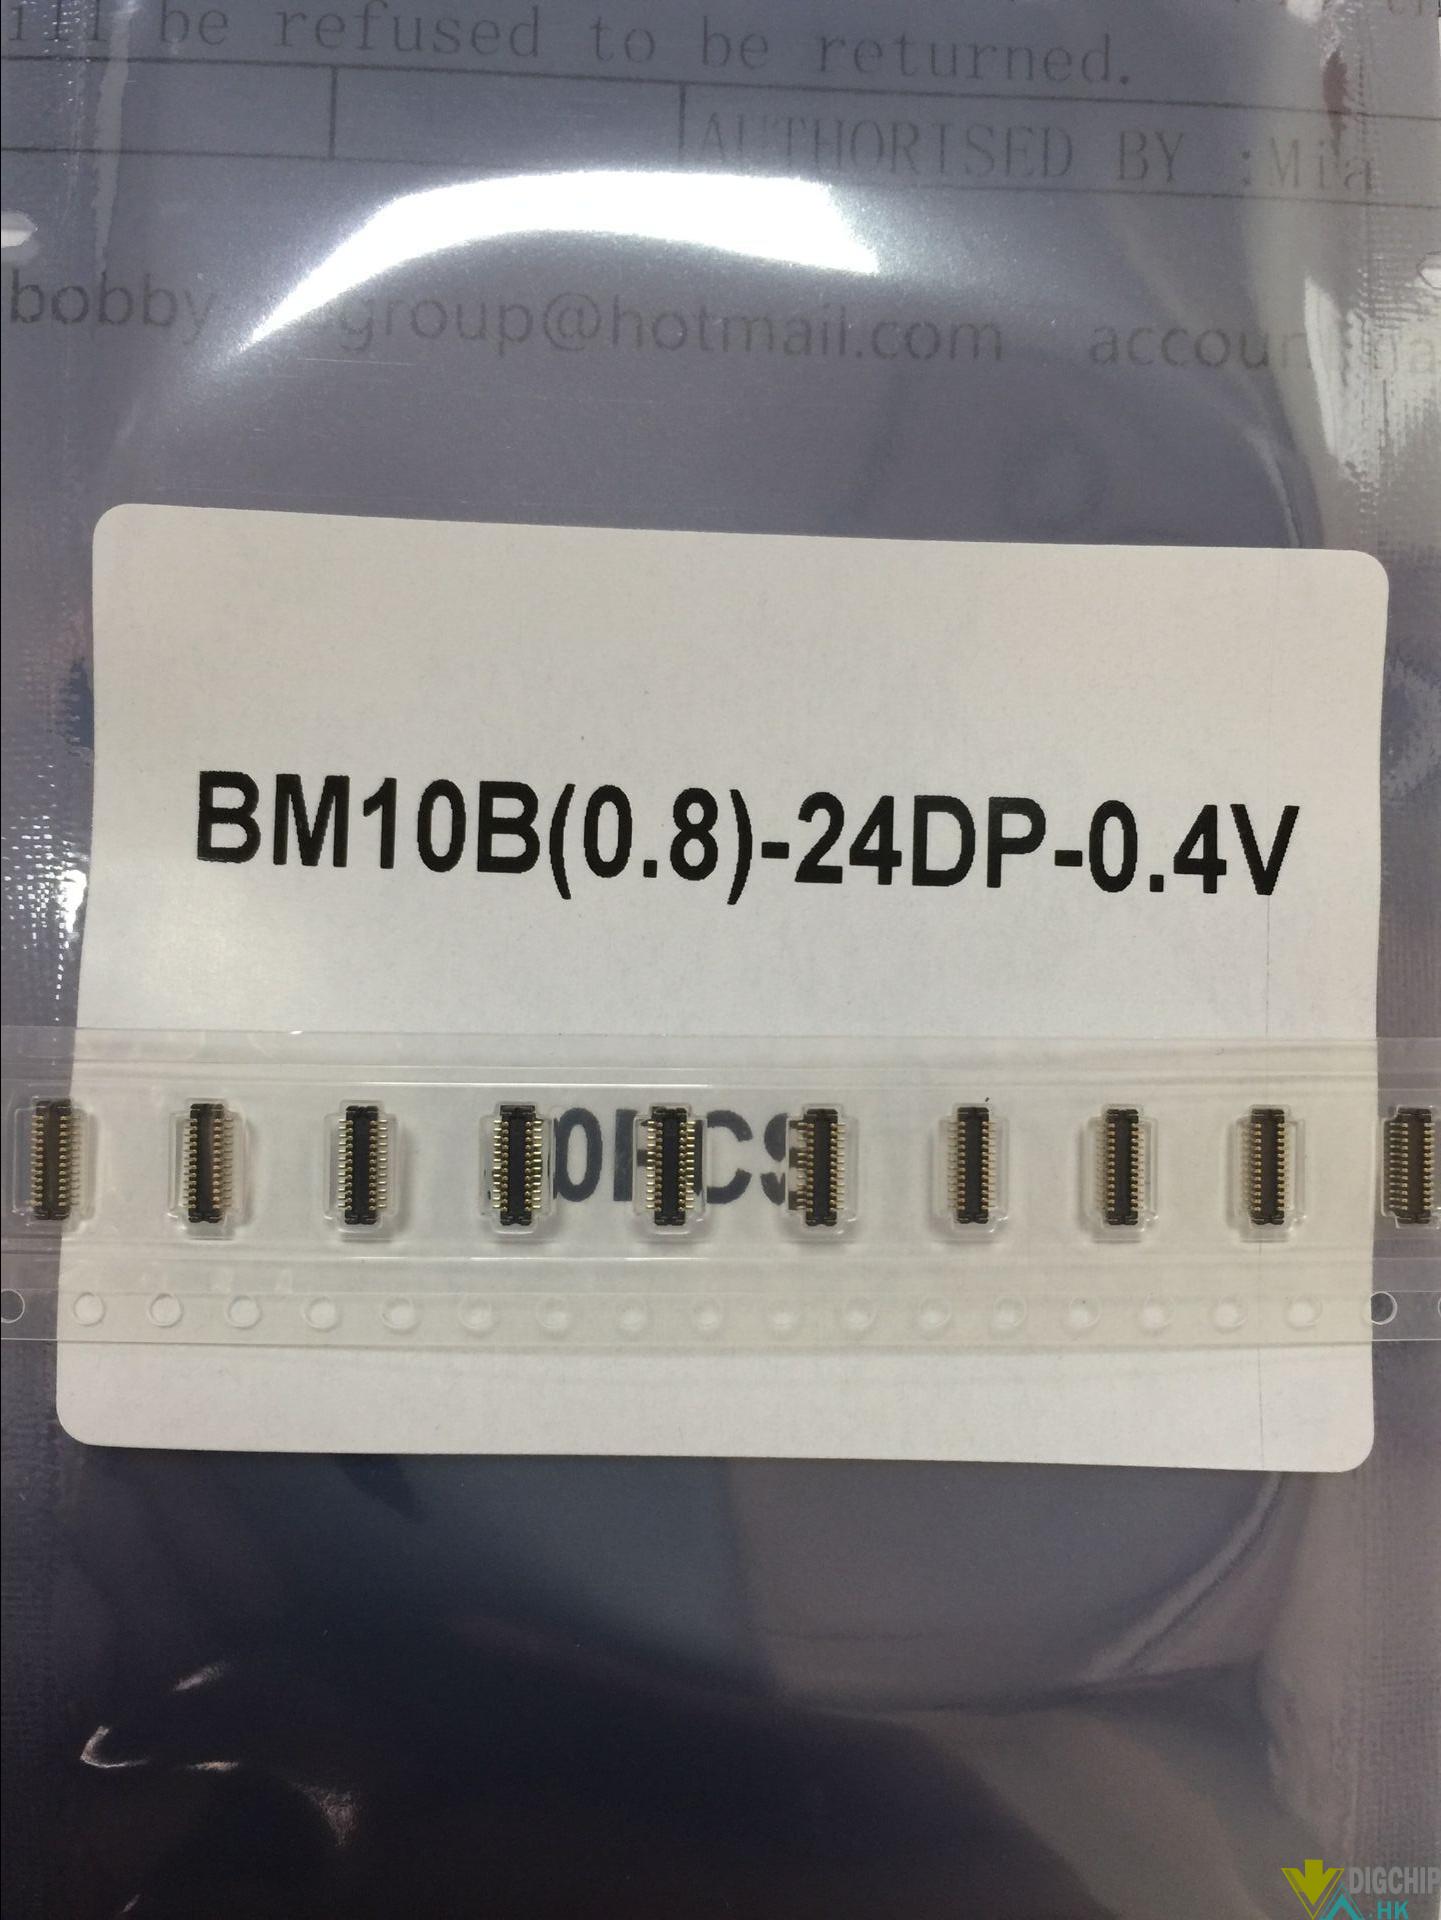 BM10B(0.8)-24DP-0.4V